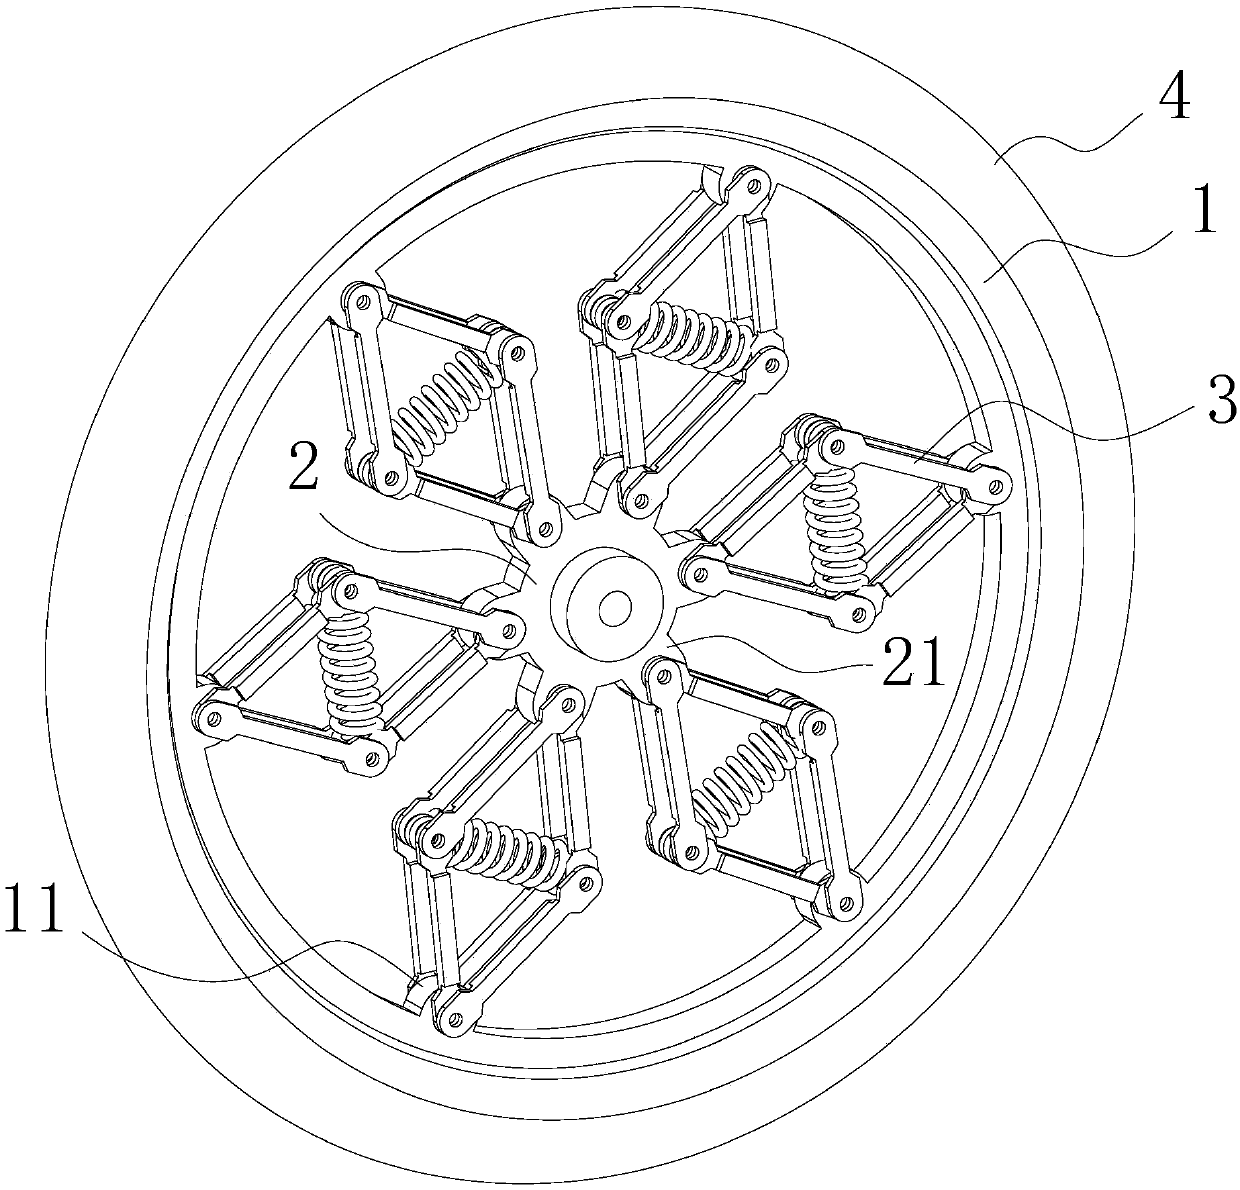 Structural type damping wheel